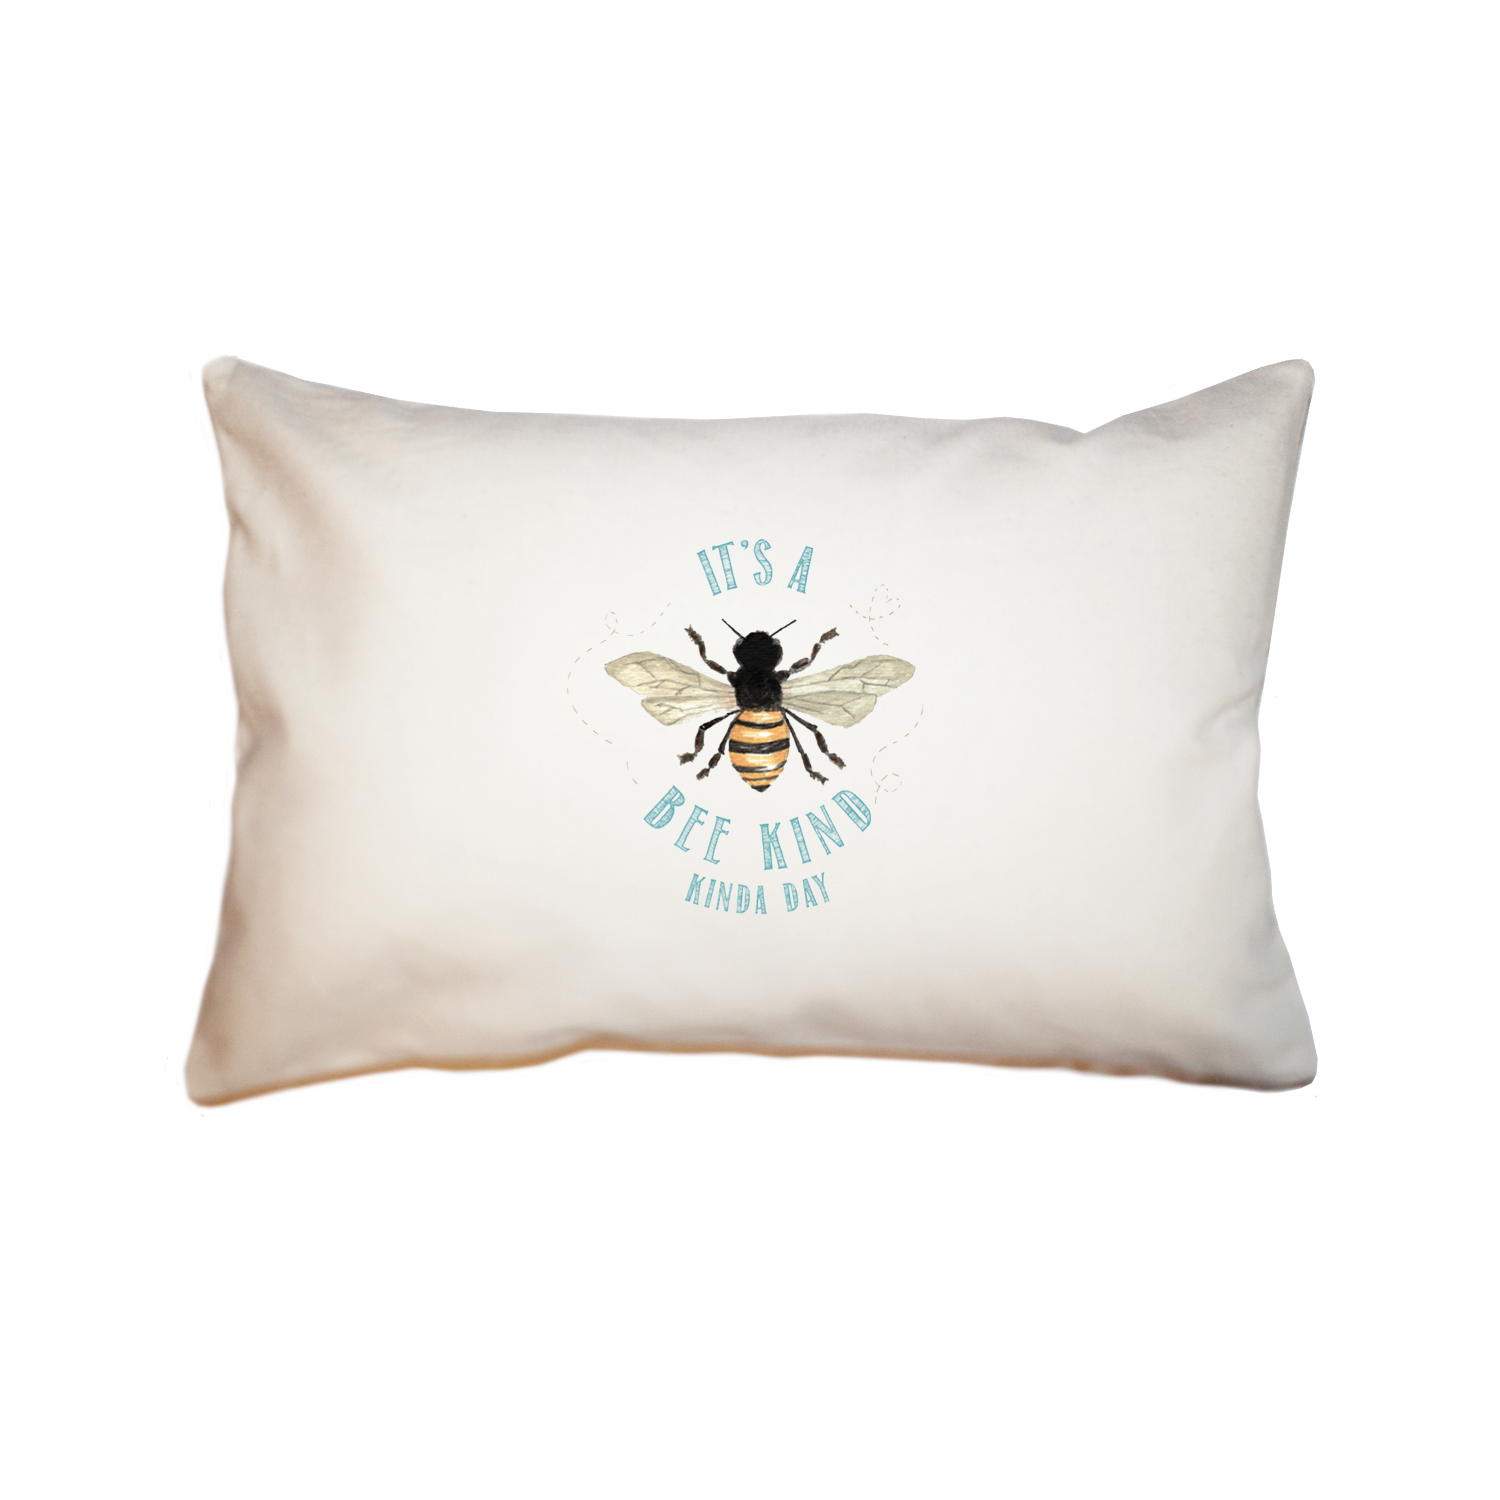 bee kind, kinda day large rectangle pillow